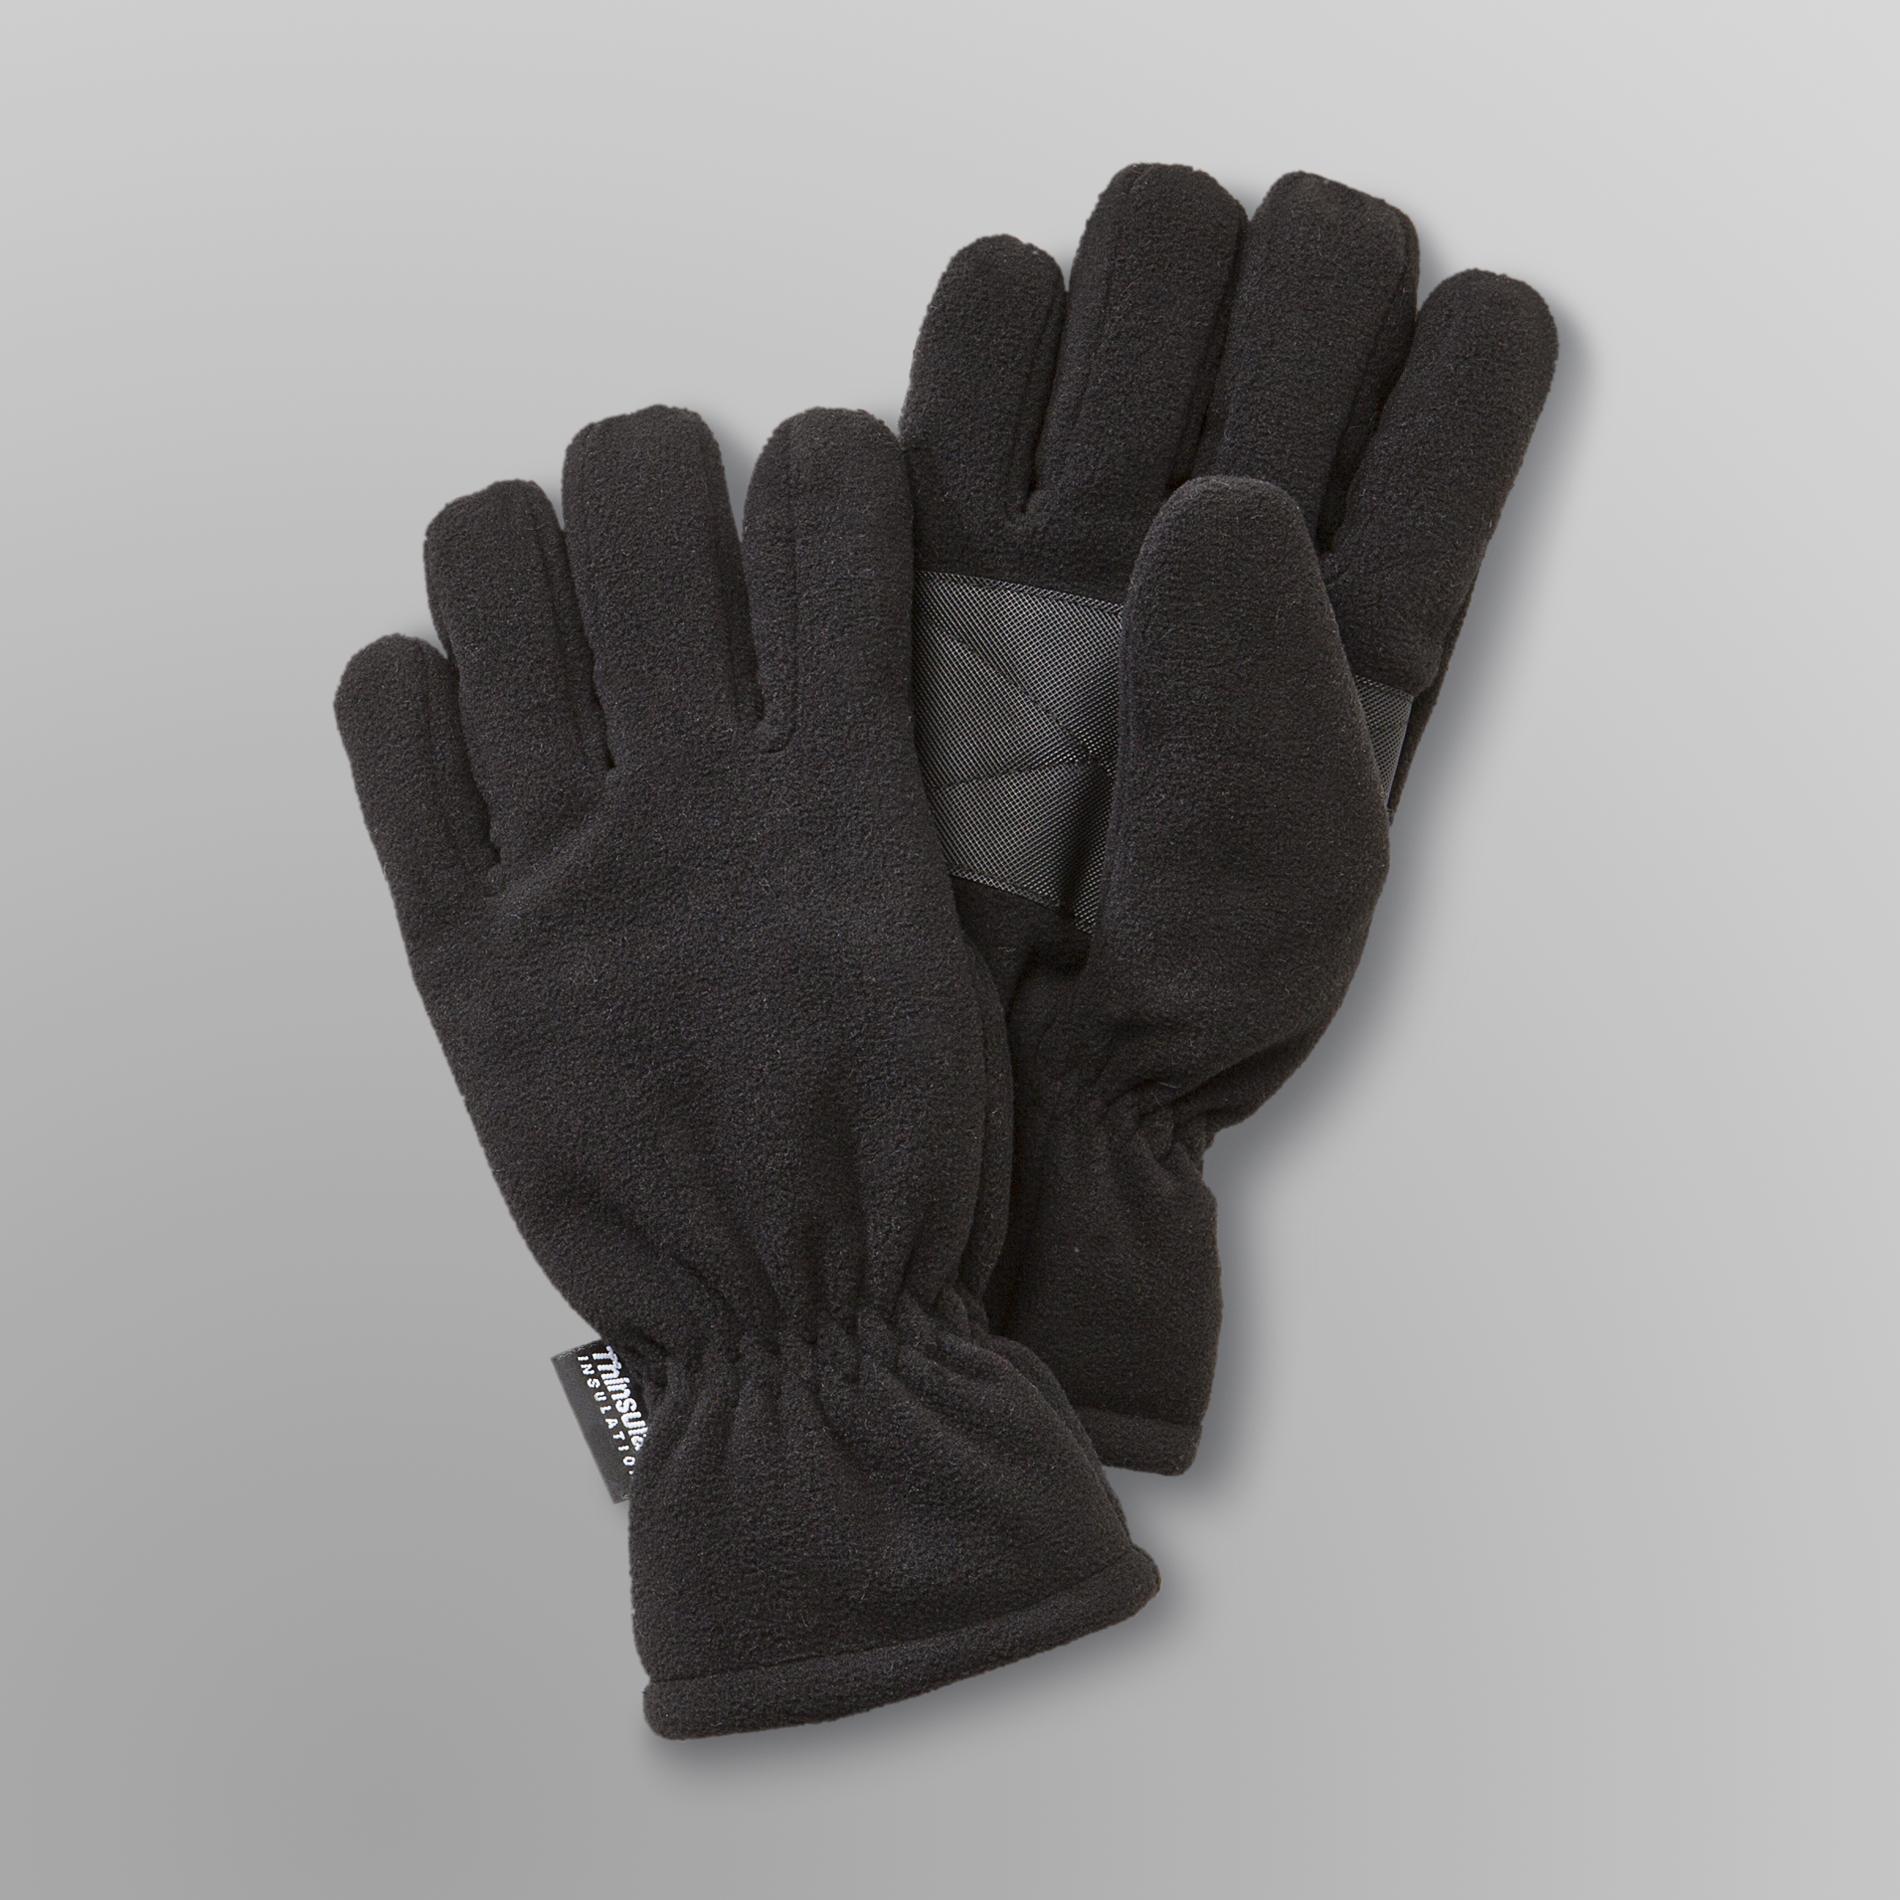 Athletech Men's Microfleece Gloves